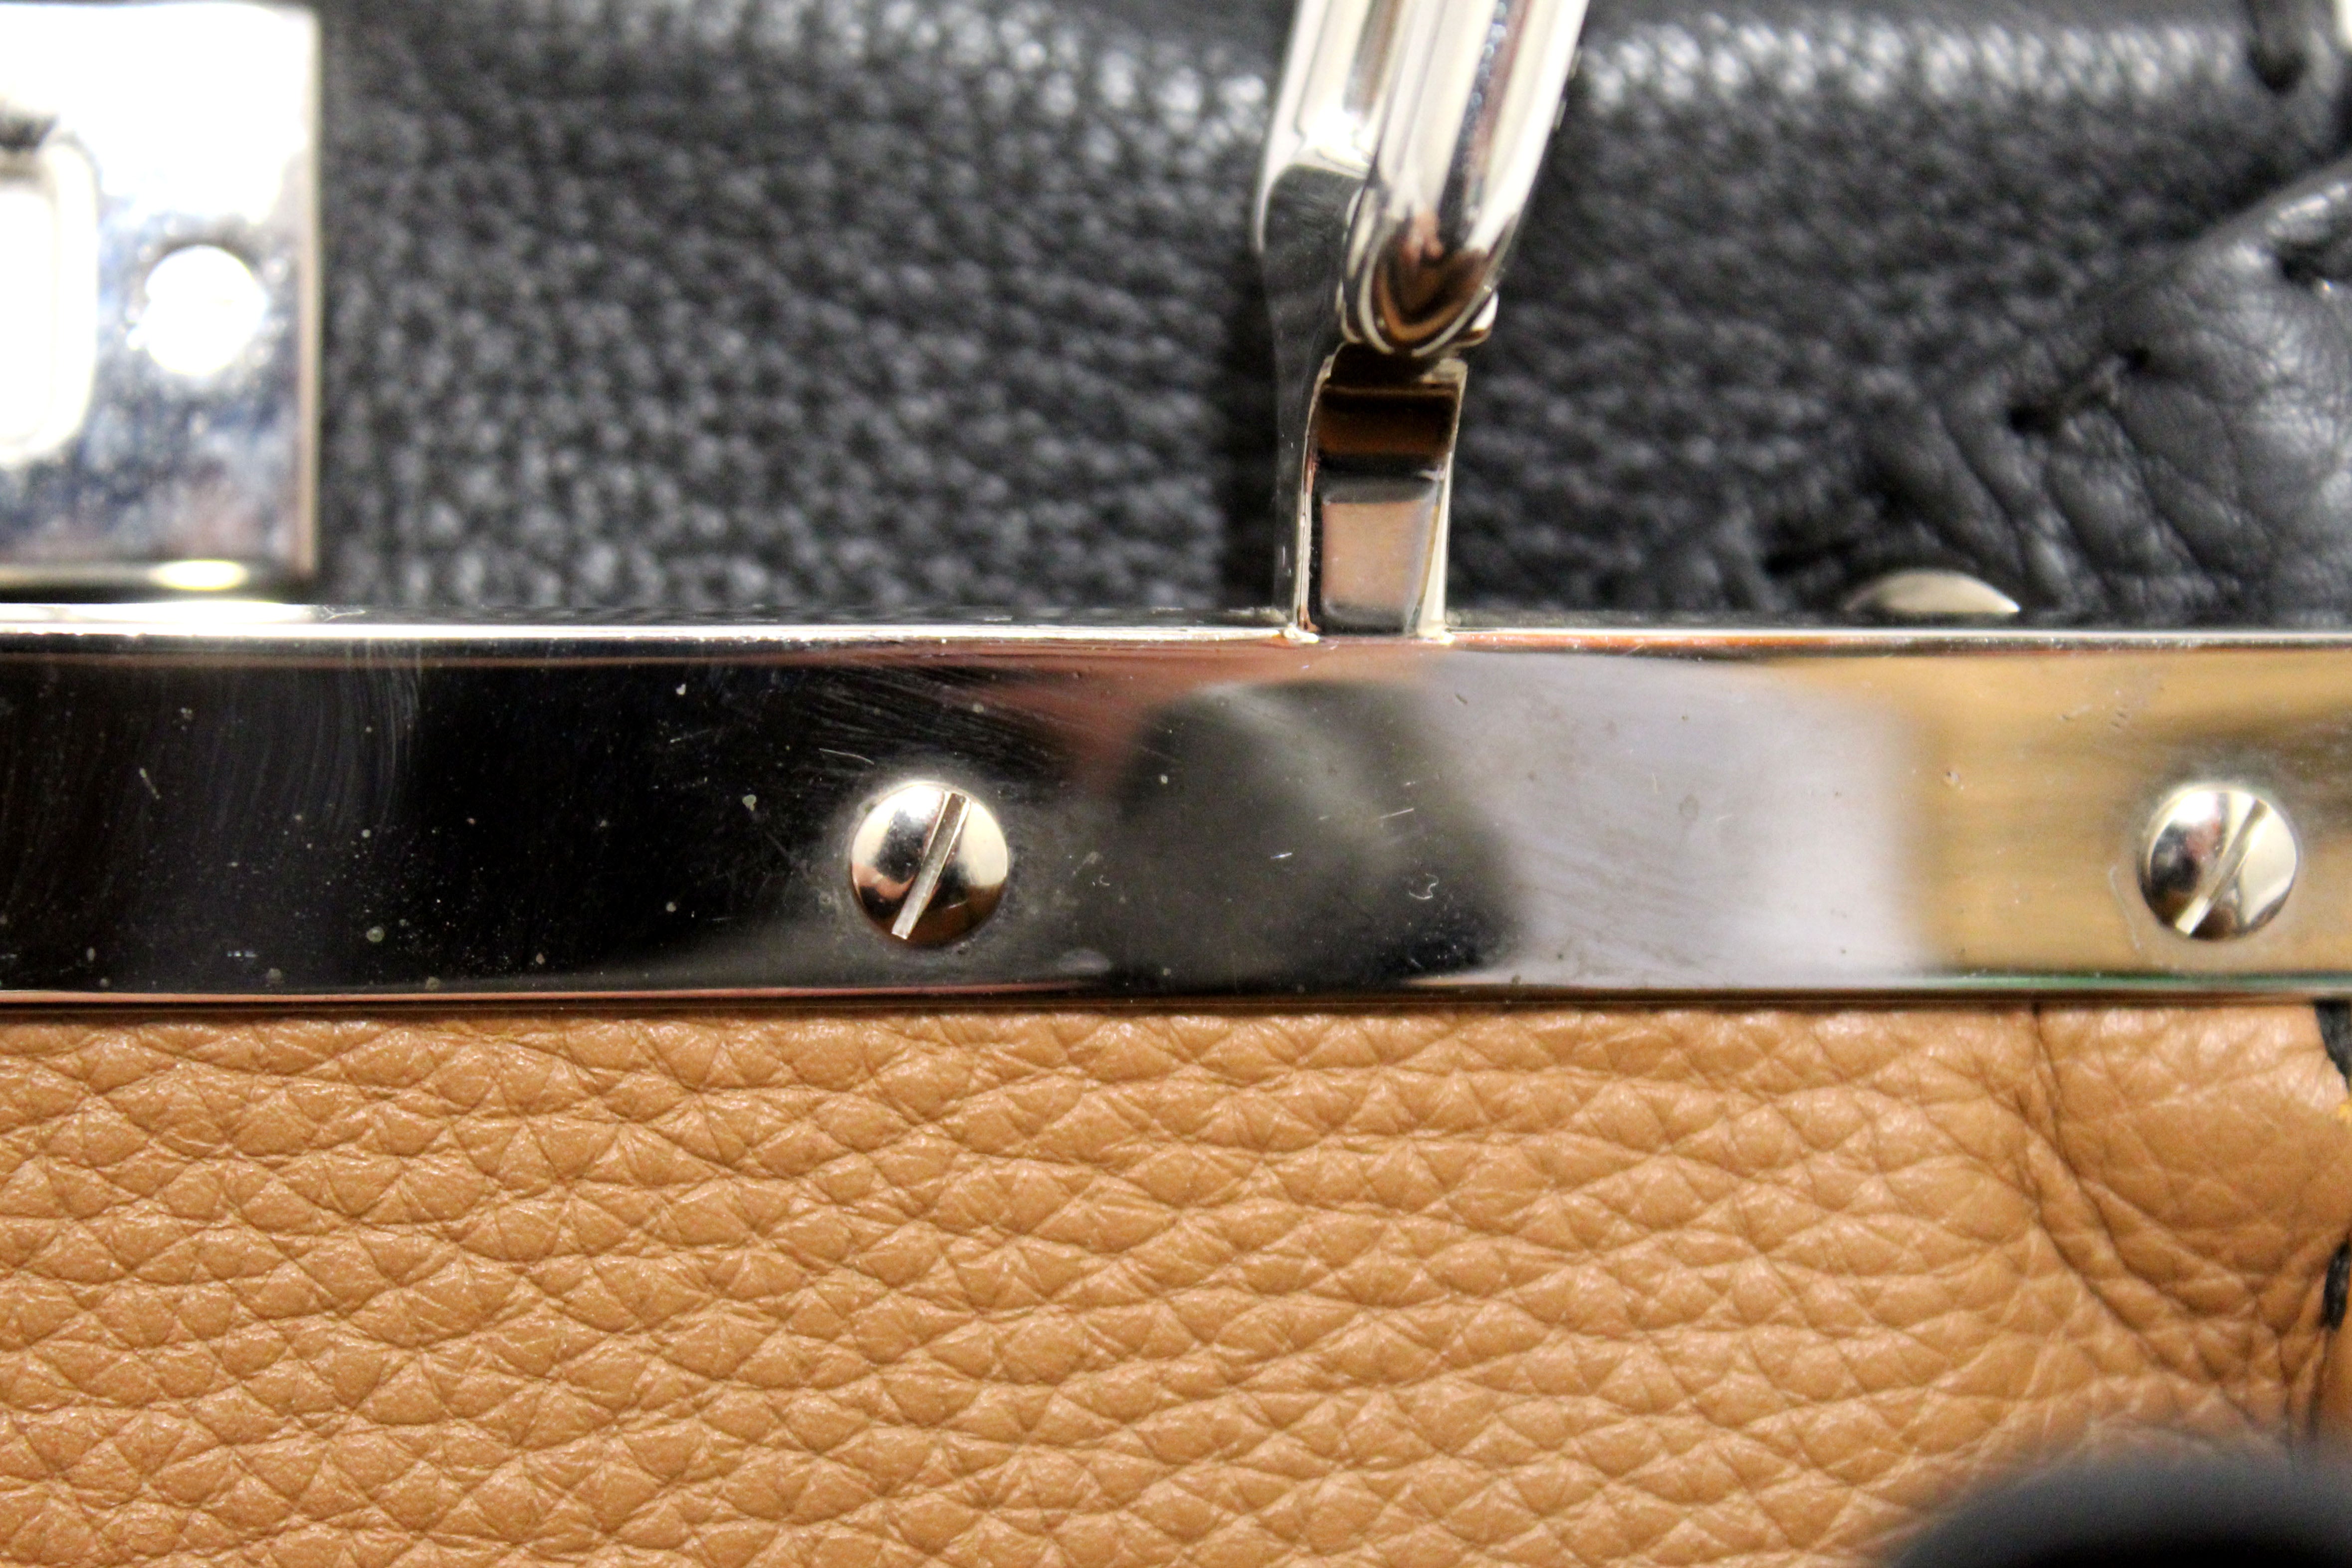 Authentic Fendi Black Cuoio Romano Leather Selleria Medium Peekaboo Iconic Satchel Bag